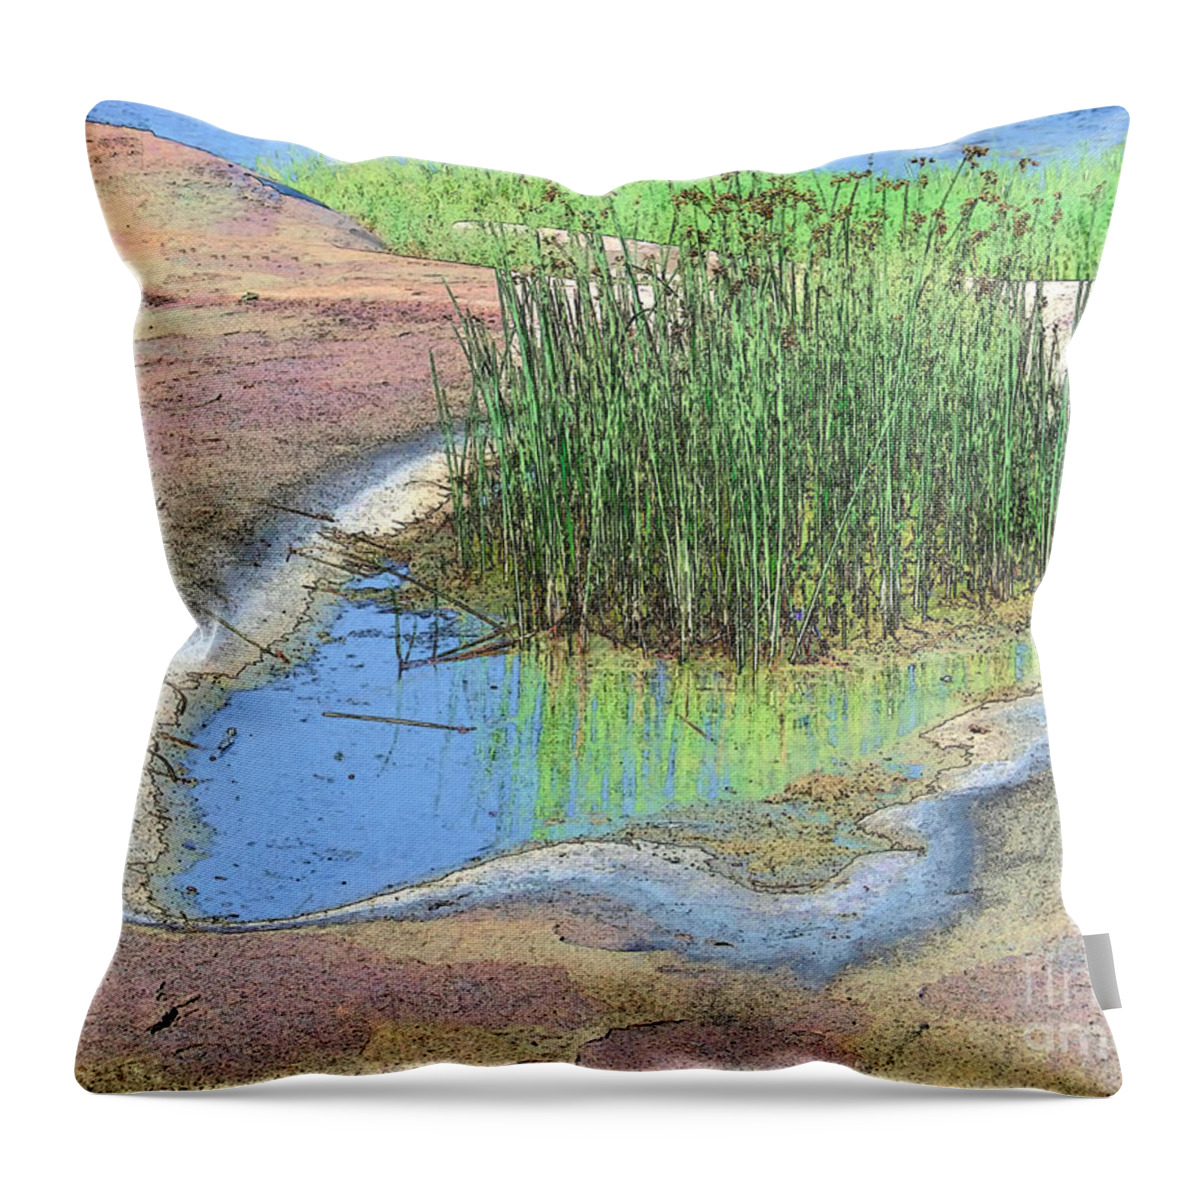 Grass Throw Pillow featuring the photograph Grass Growing on Rocks by Teresa Zieba